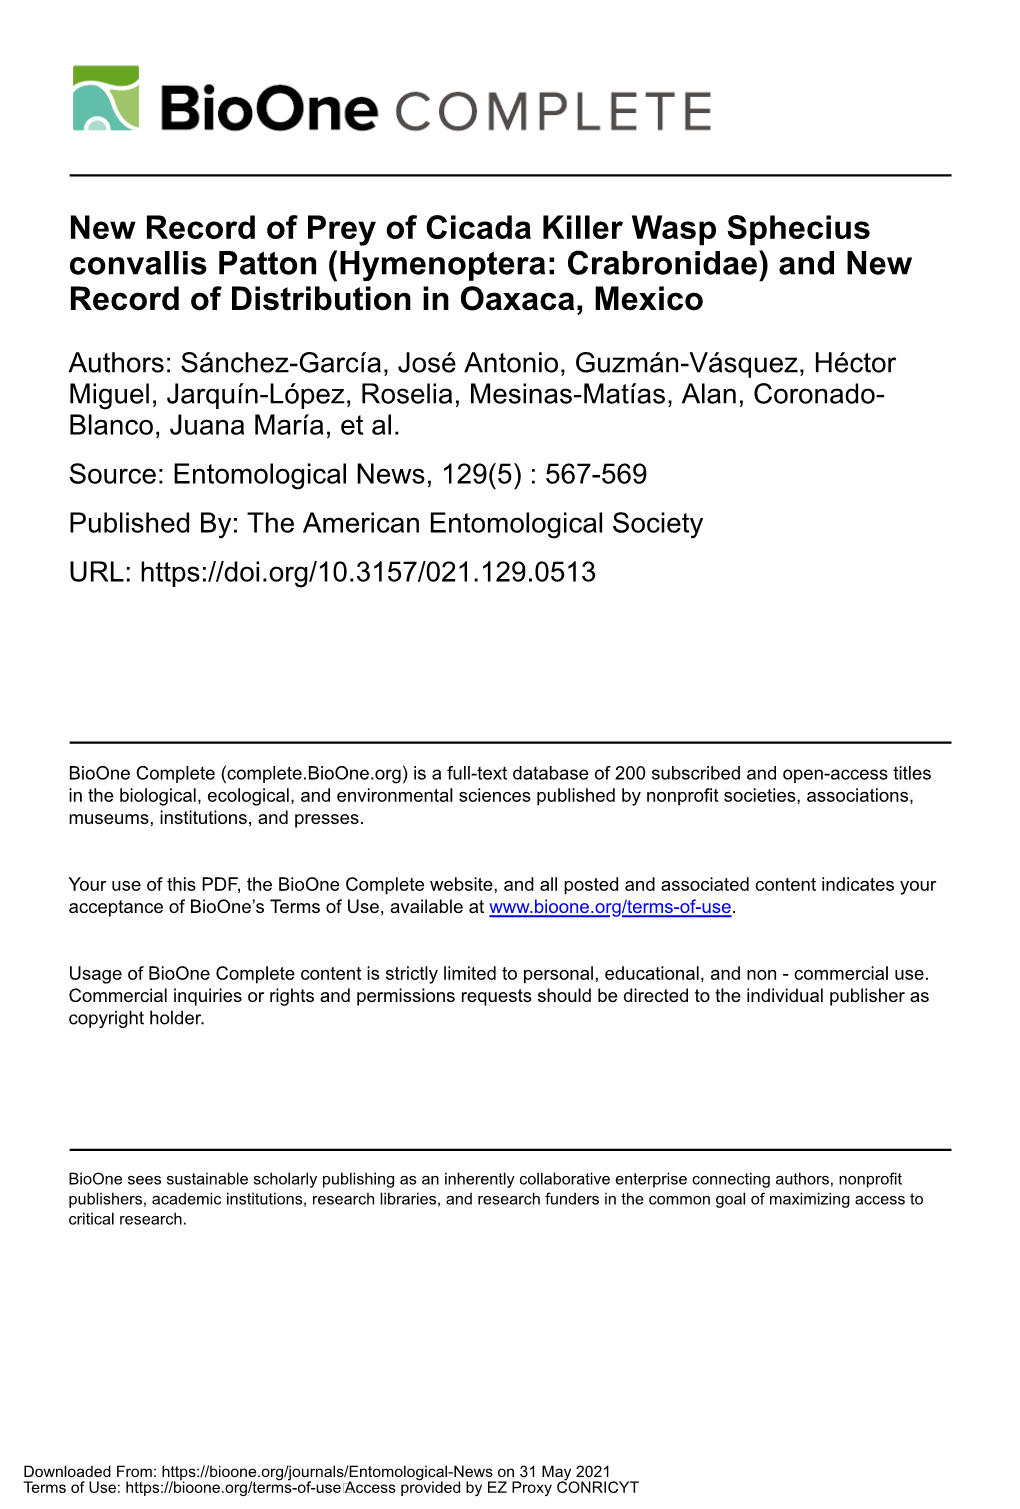 New Record of Prey of Cicada Killer Wasp Sphecius Convallis Patton (Hymenoptera: Crabronidae) and New Record of Distribution in Oaxaca, Mexico